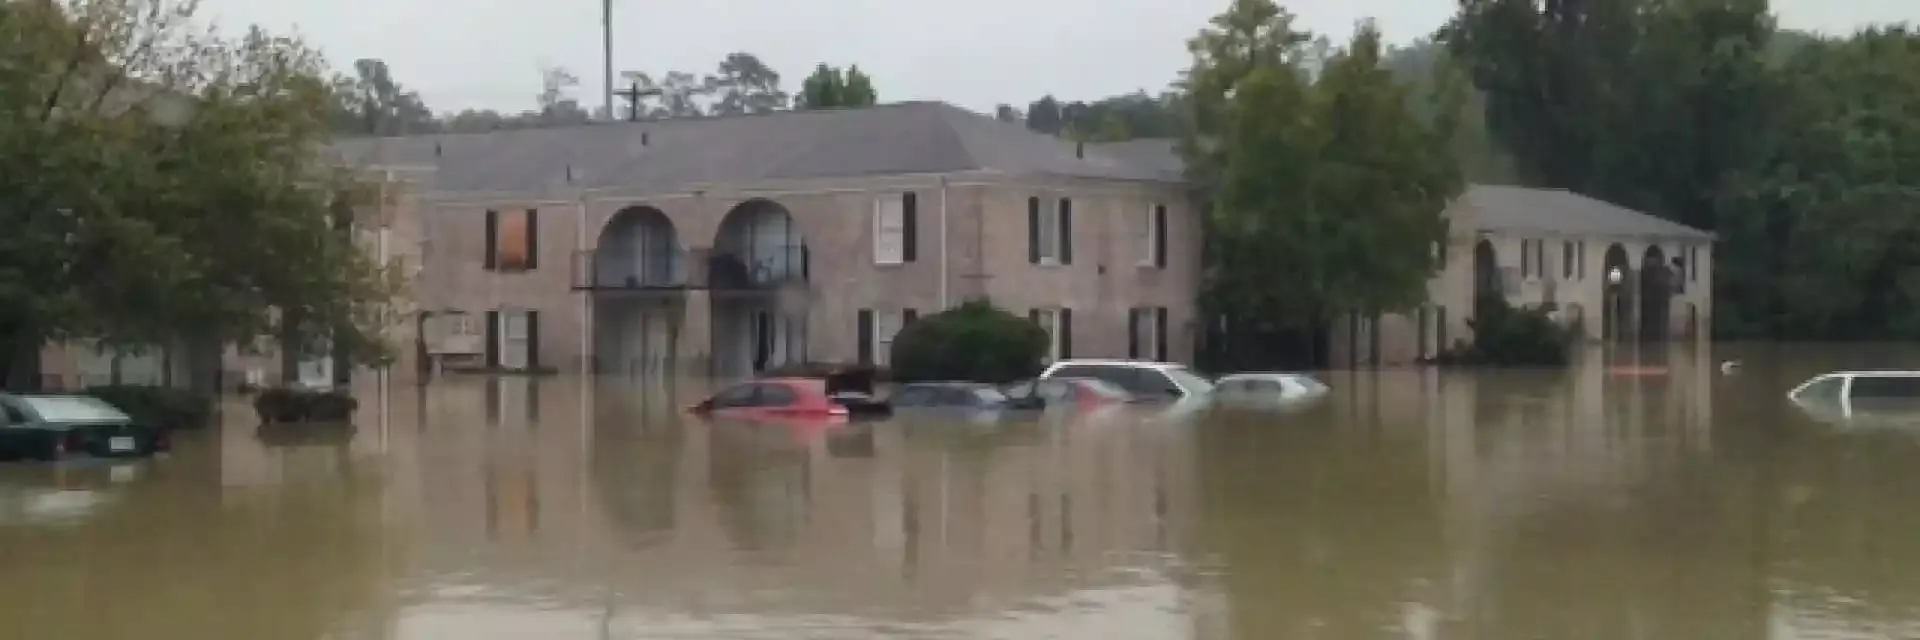 Flooding in South Carolina